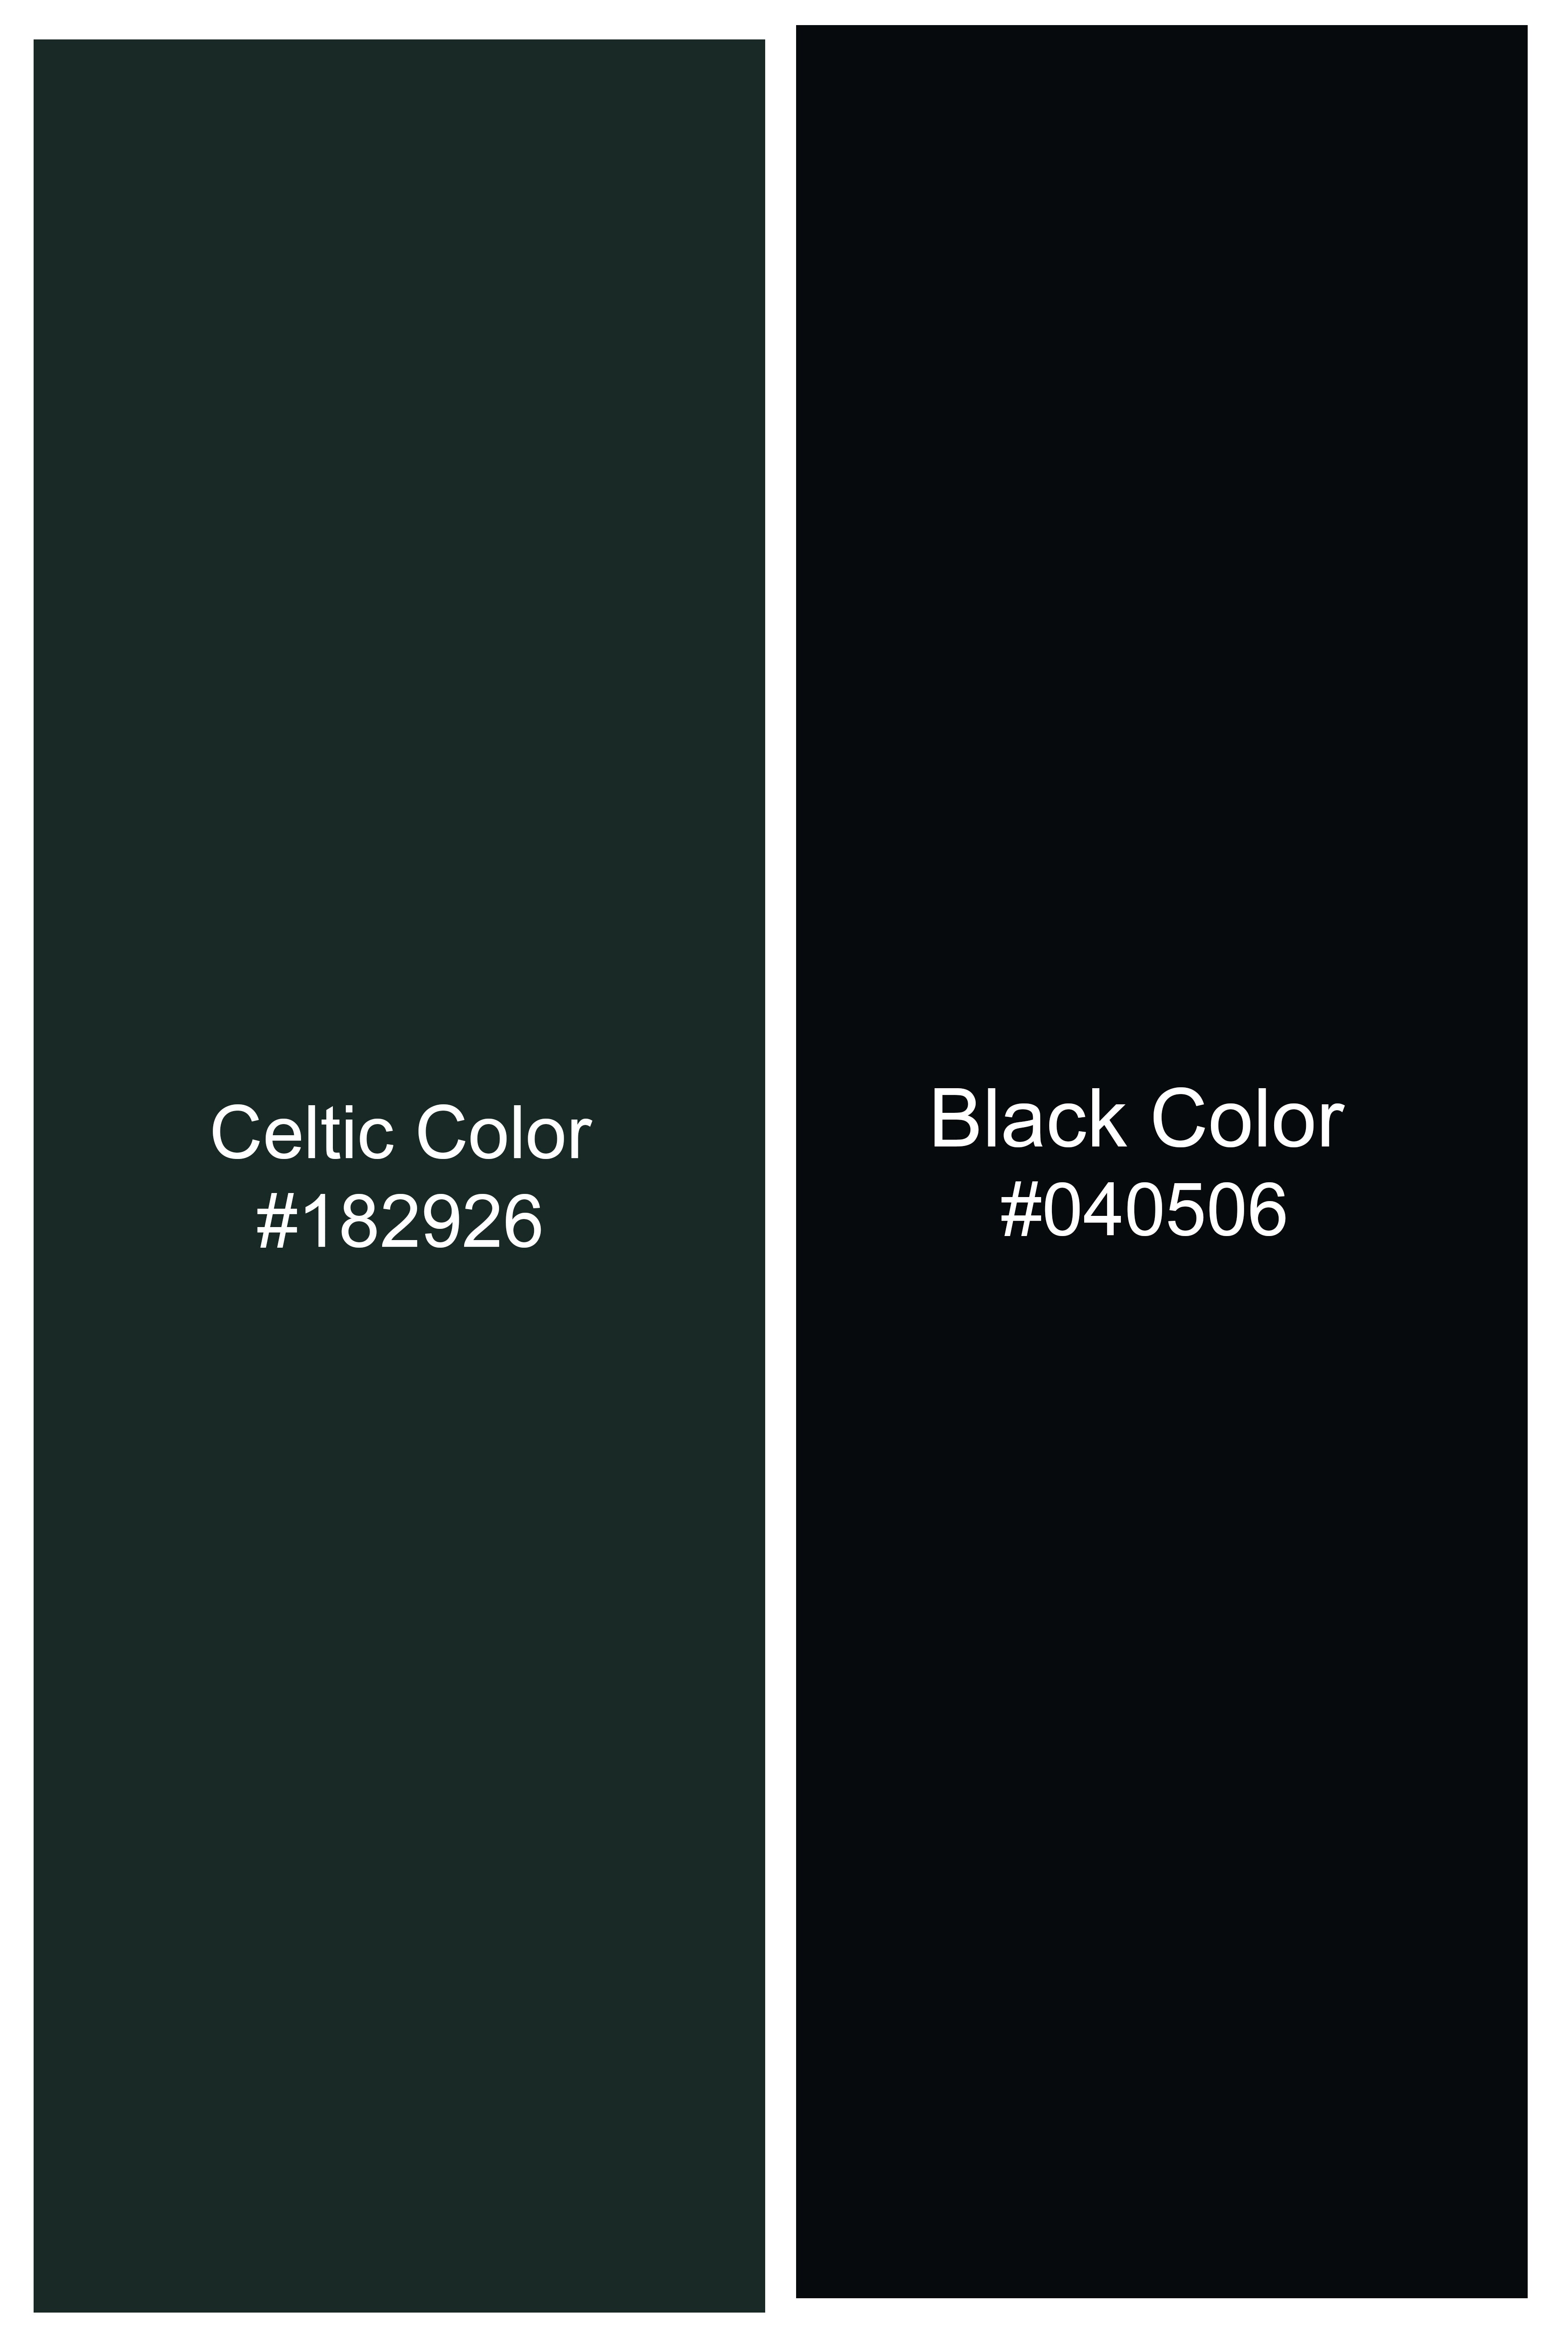 Celtic Green with Black Striped Wool Rich Cross Placket Bandhgala Blazer